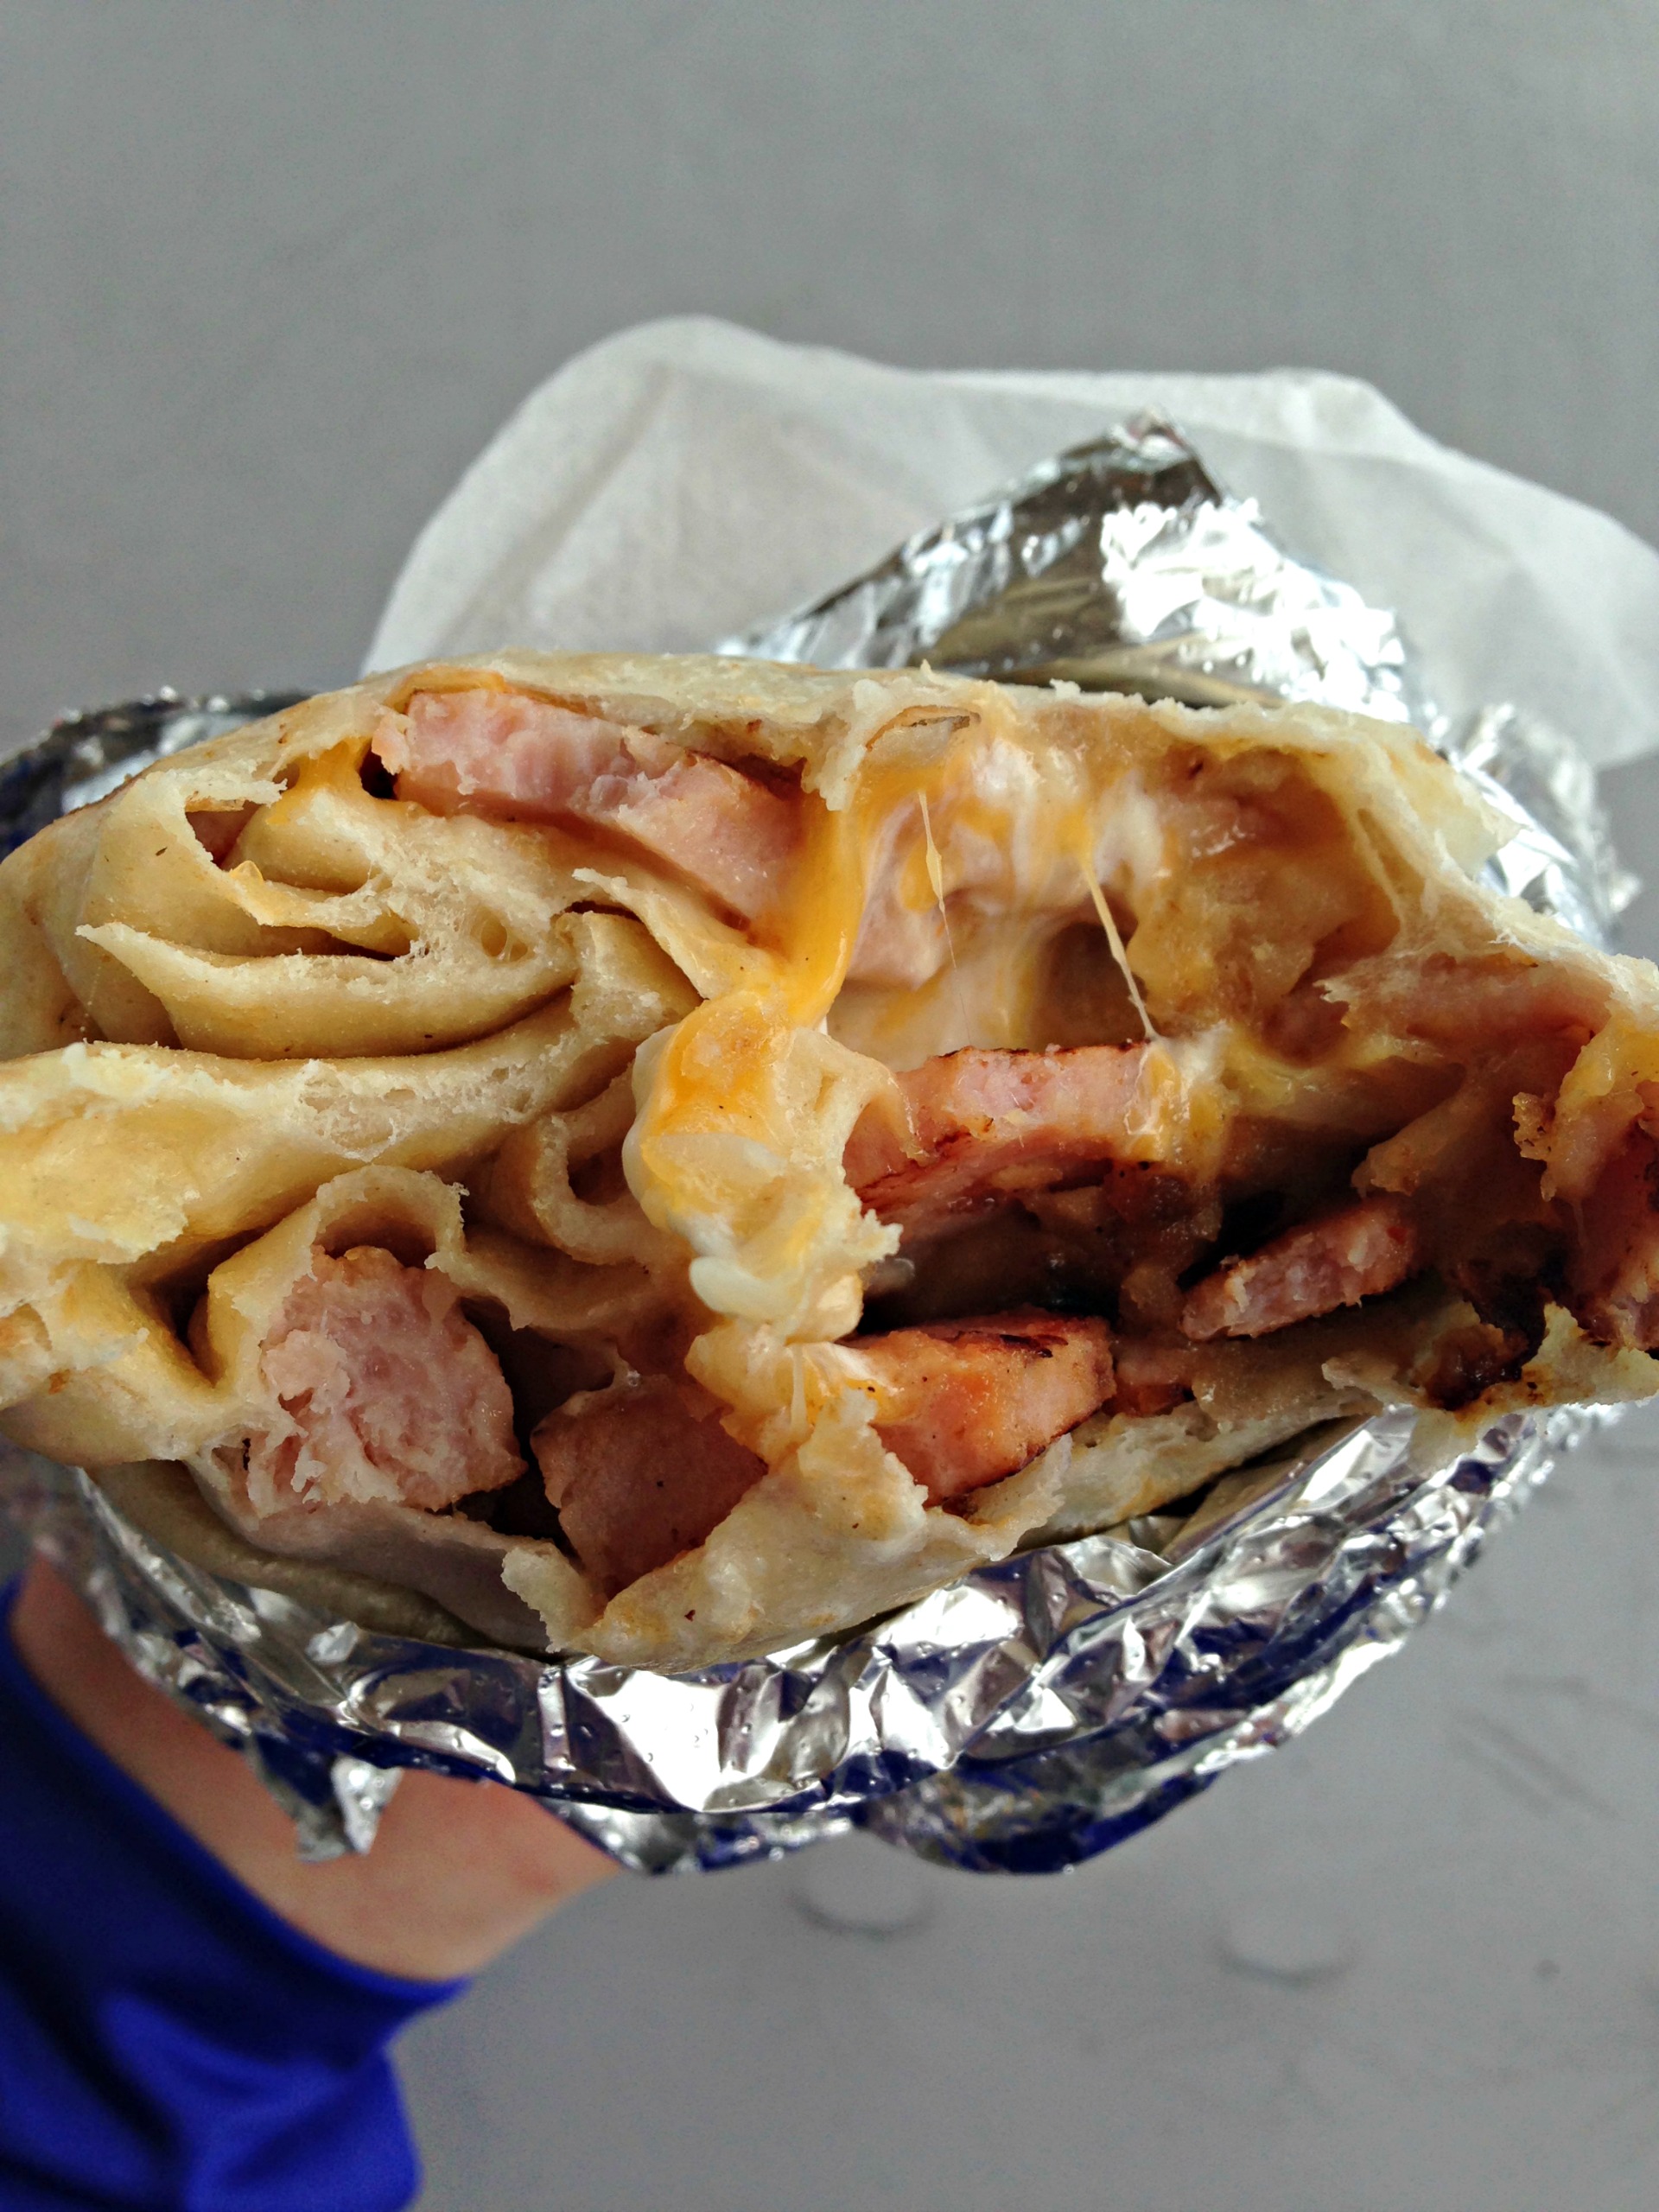 A suprisingly delicious ham breakfast burrito from Kelly's Deli in Emeryville.